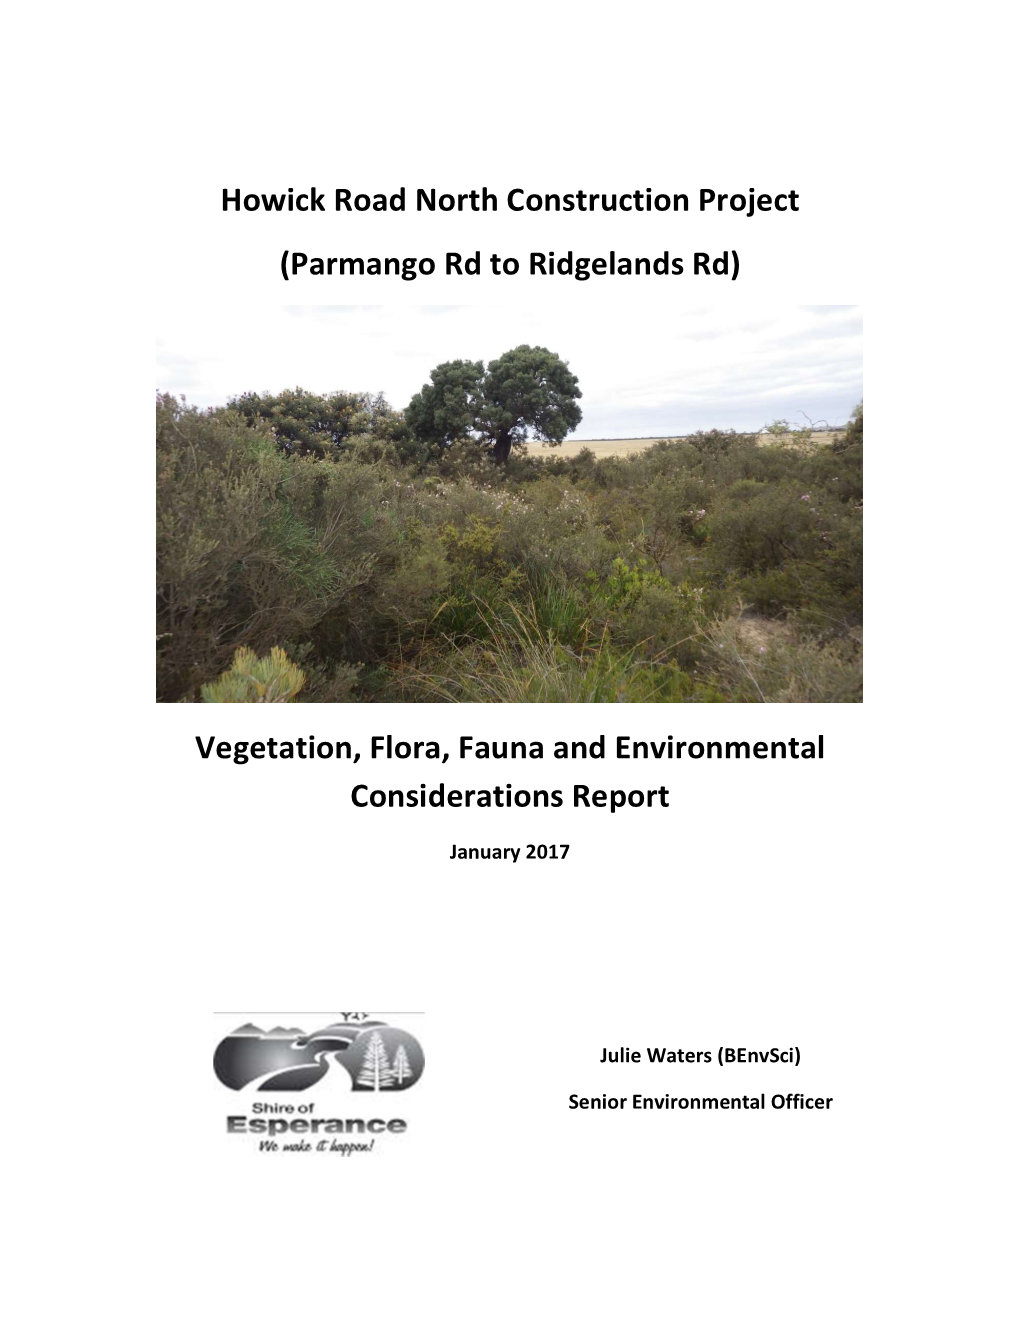 Vegetation, Flora, Fauna and Environmental Considerations Report